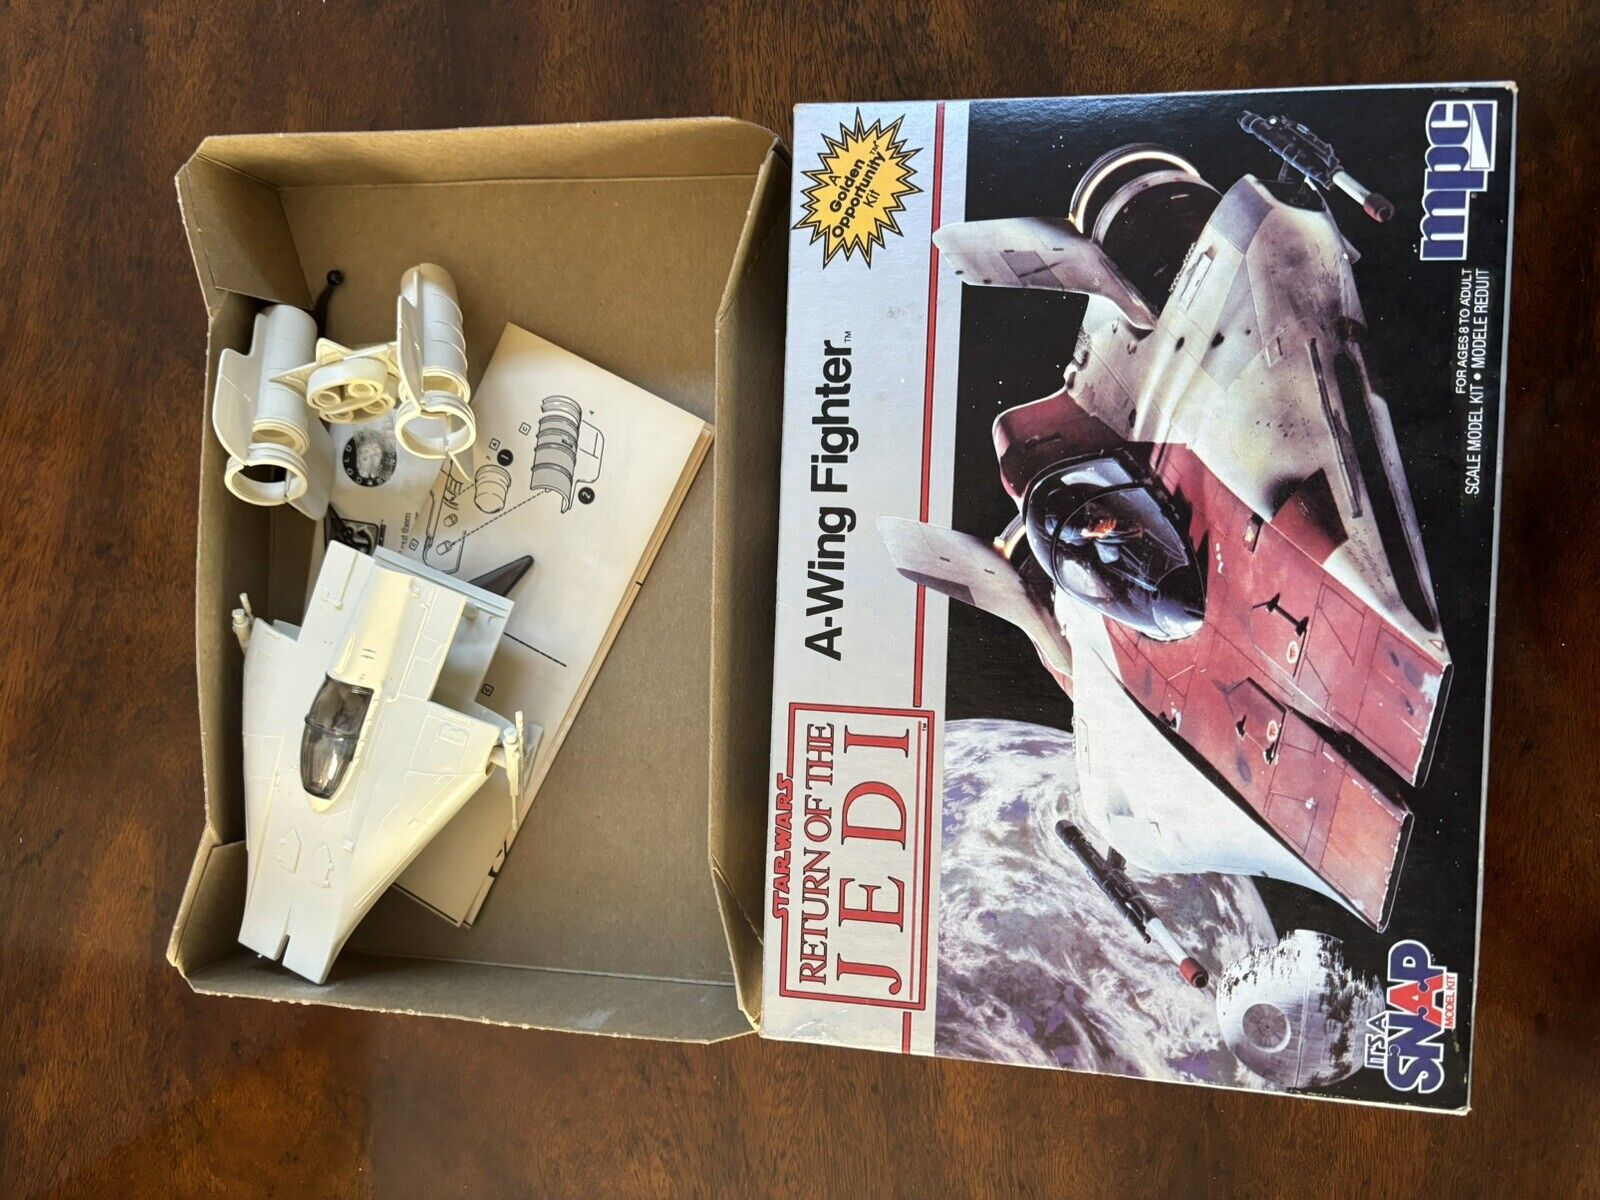 Star Wars Return Of The Jedi A-Wing Fighter Mpc Ertl Model Kit